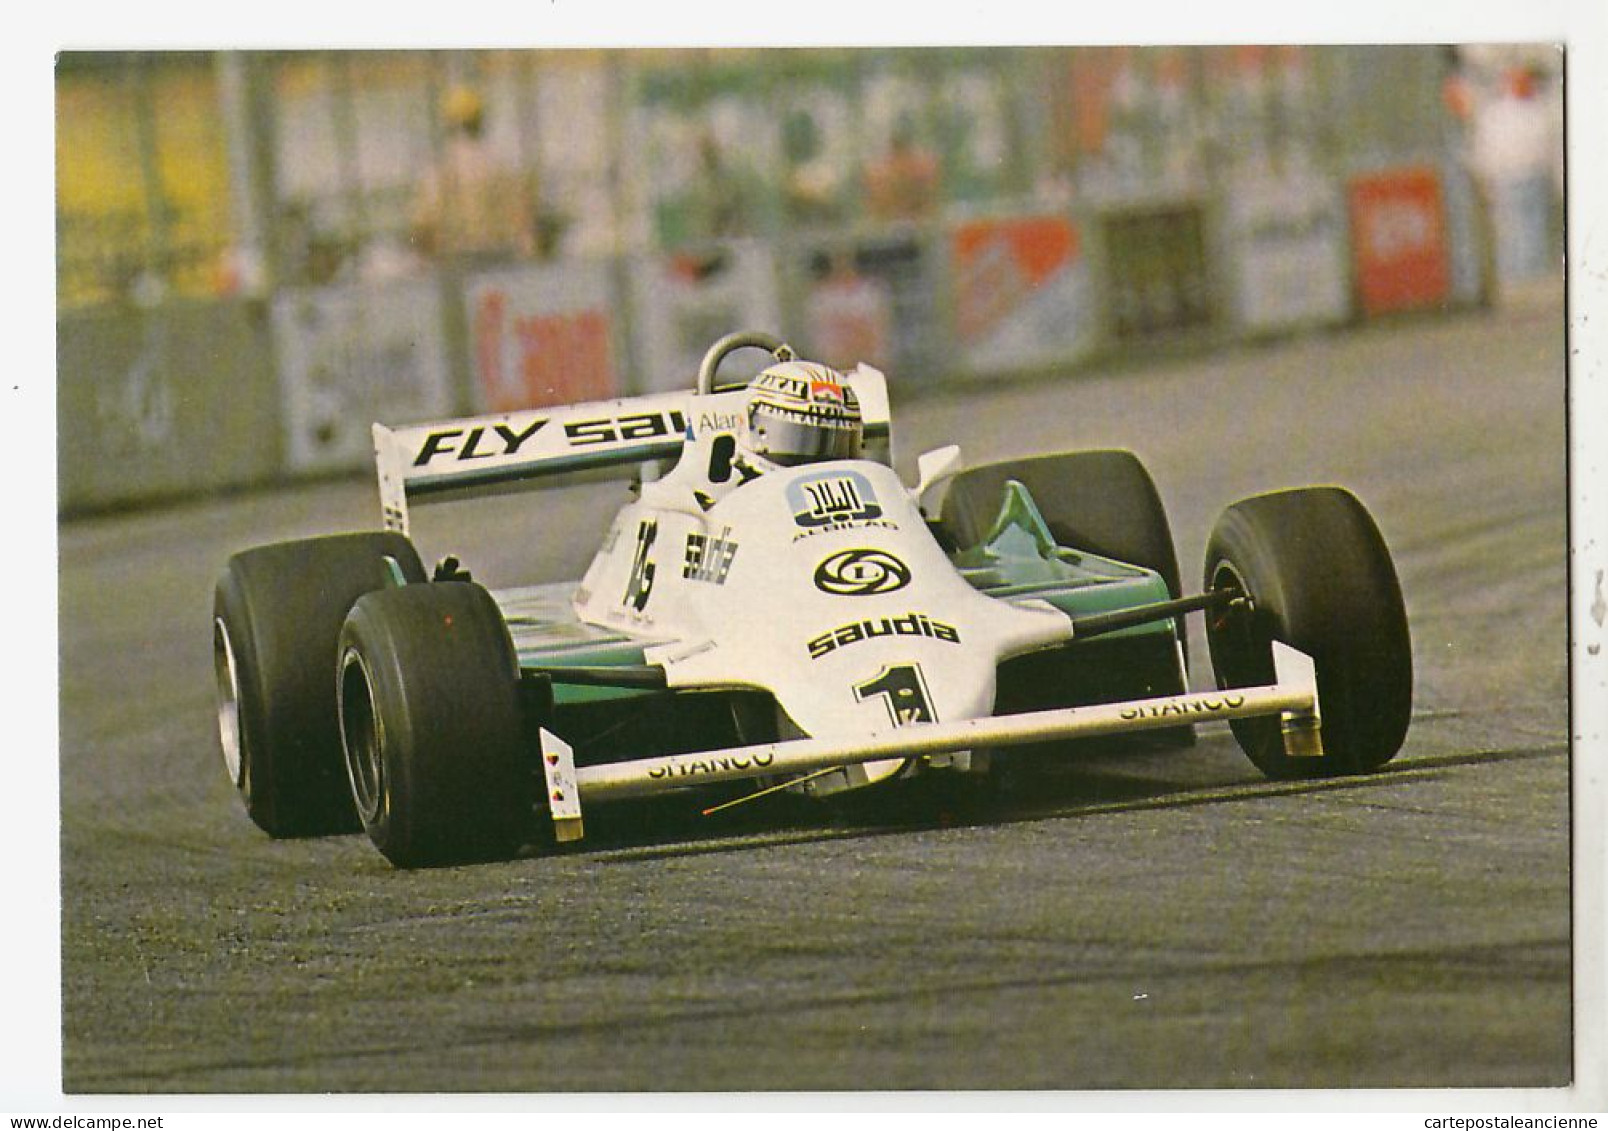 04778 / WILLIAMS N°1 Pilote Alan JONES Champion Monde Auto Grand Prix Formule 1 écurie SAUDIA IMAGE BANK - Grand Prix / F1